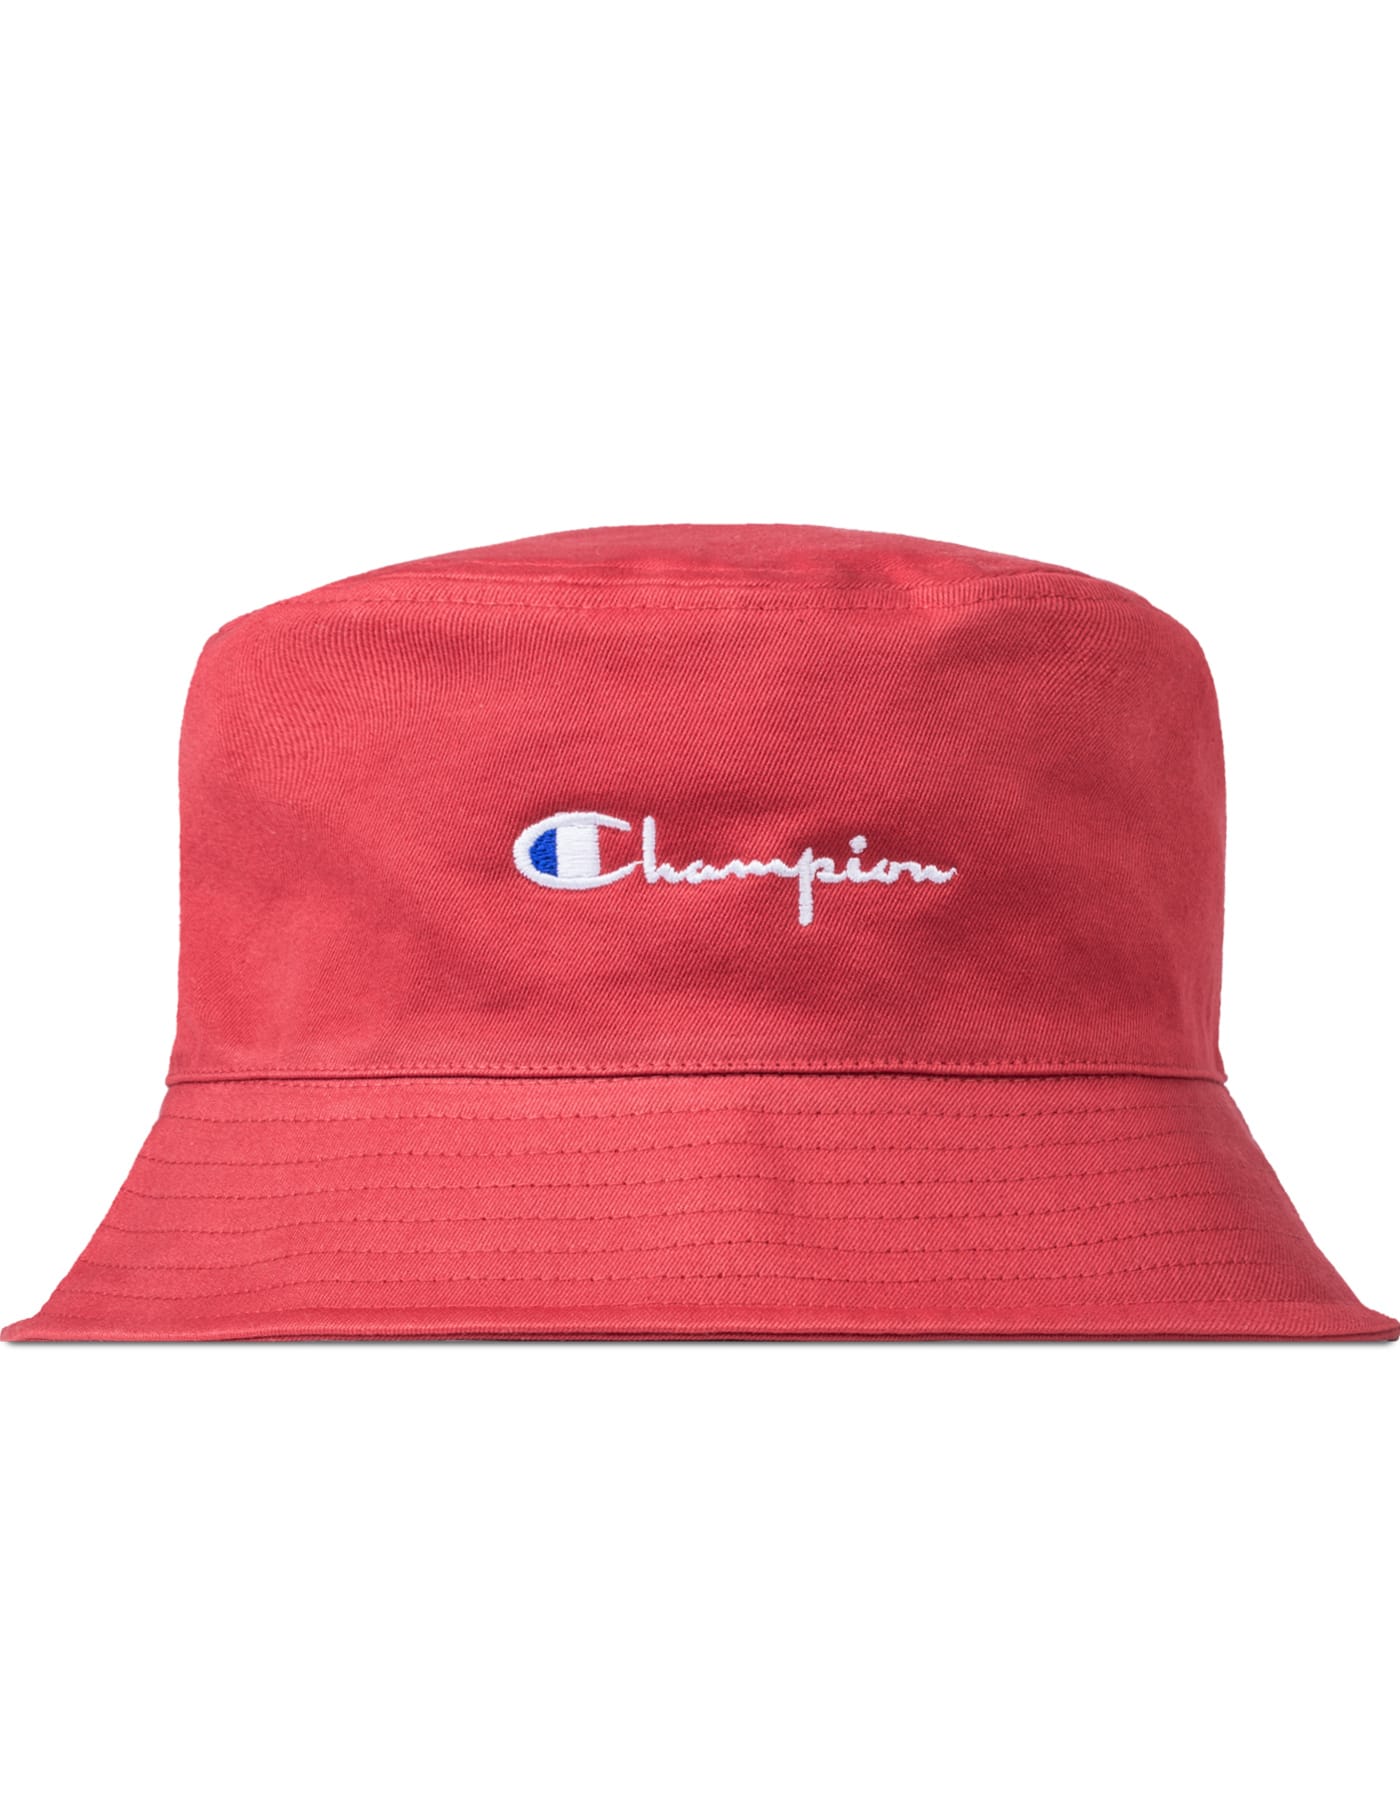 champion reverse weave bucket hat